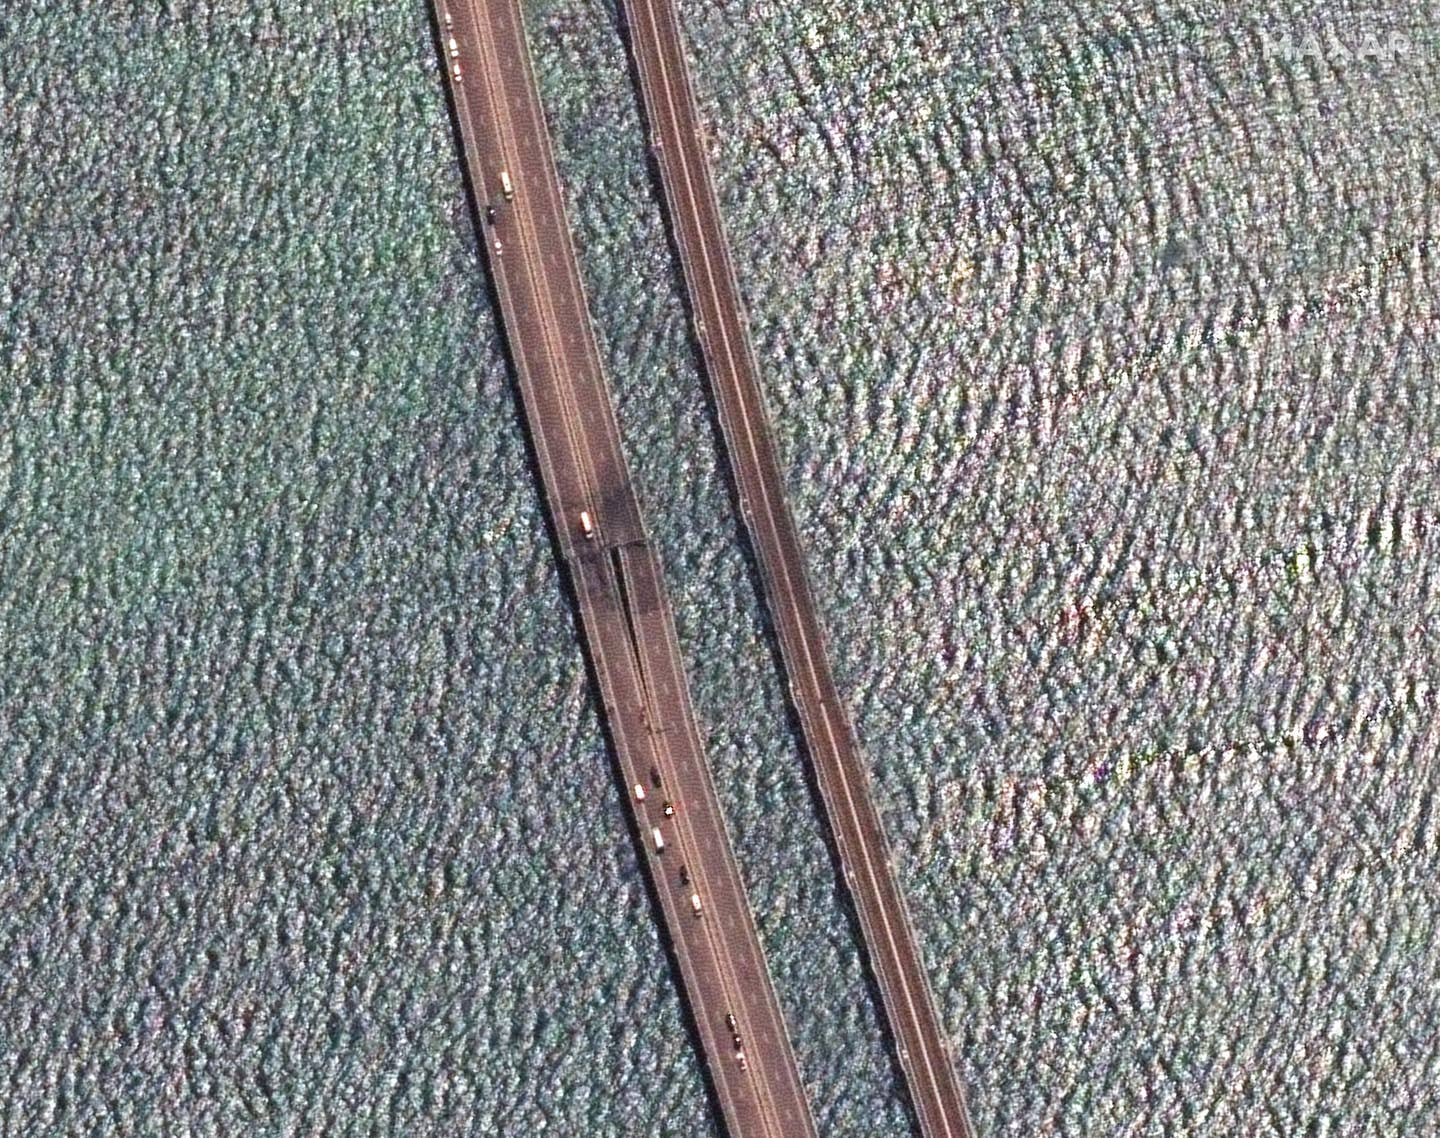 Close-up view of damaged Kerch Bridge span. (Satellite image ©2023 Maxar Technologies.)